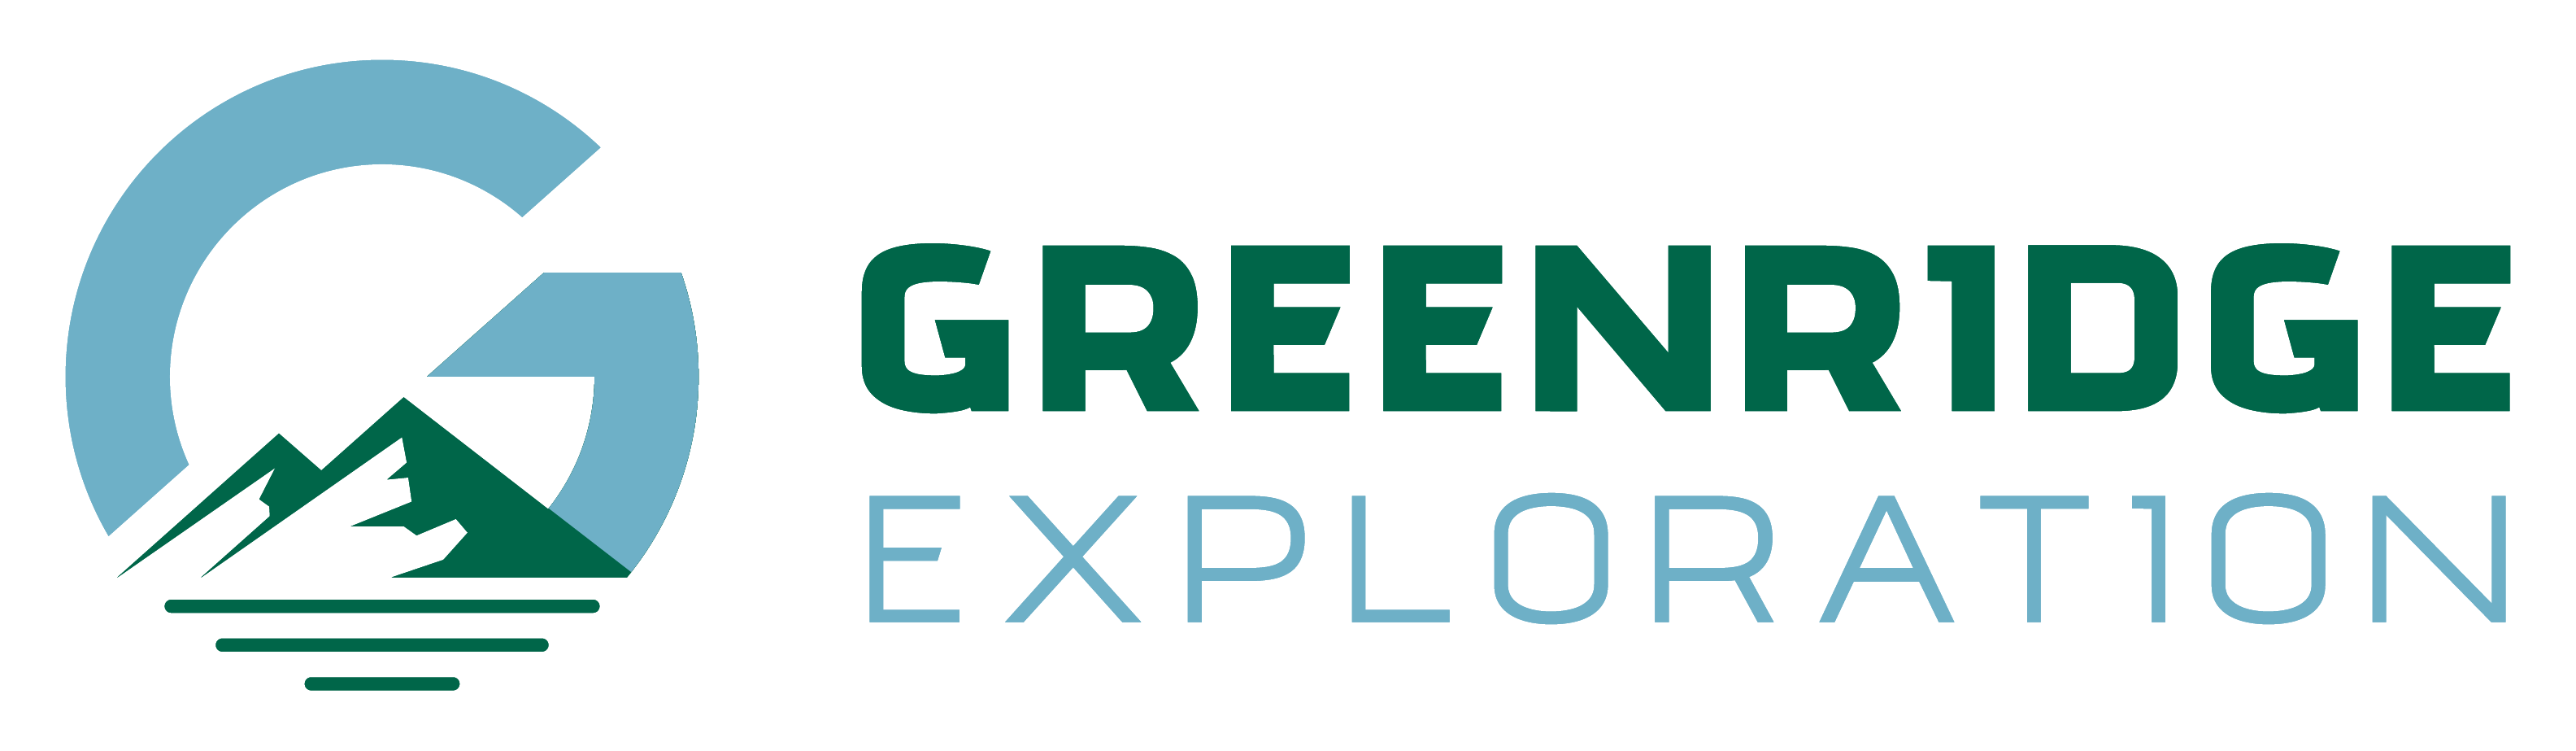 GreenridgeExploration_COL_LOGO@4x.png